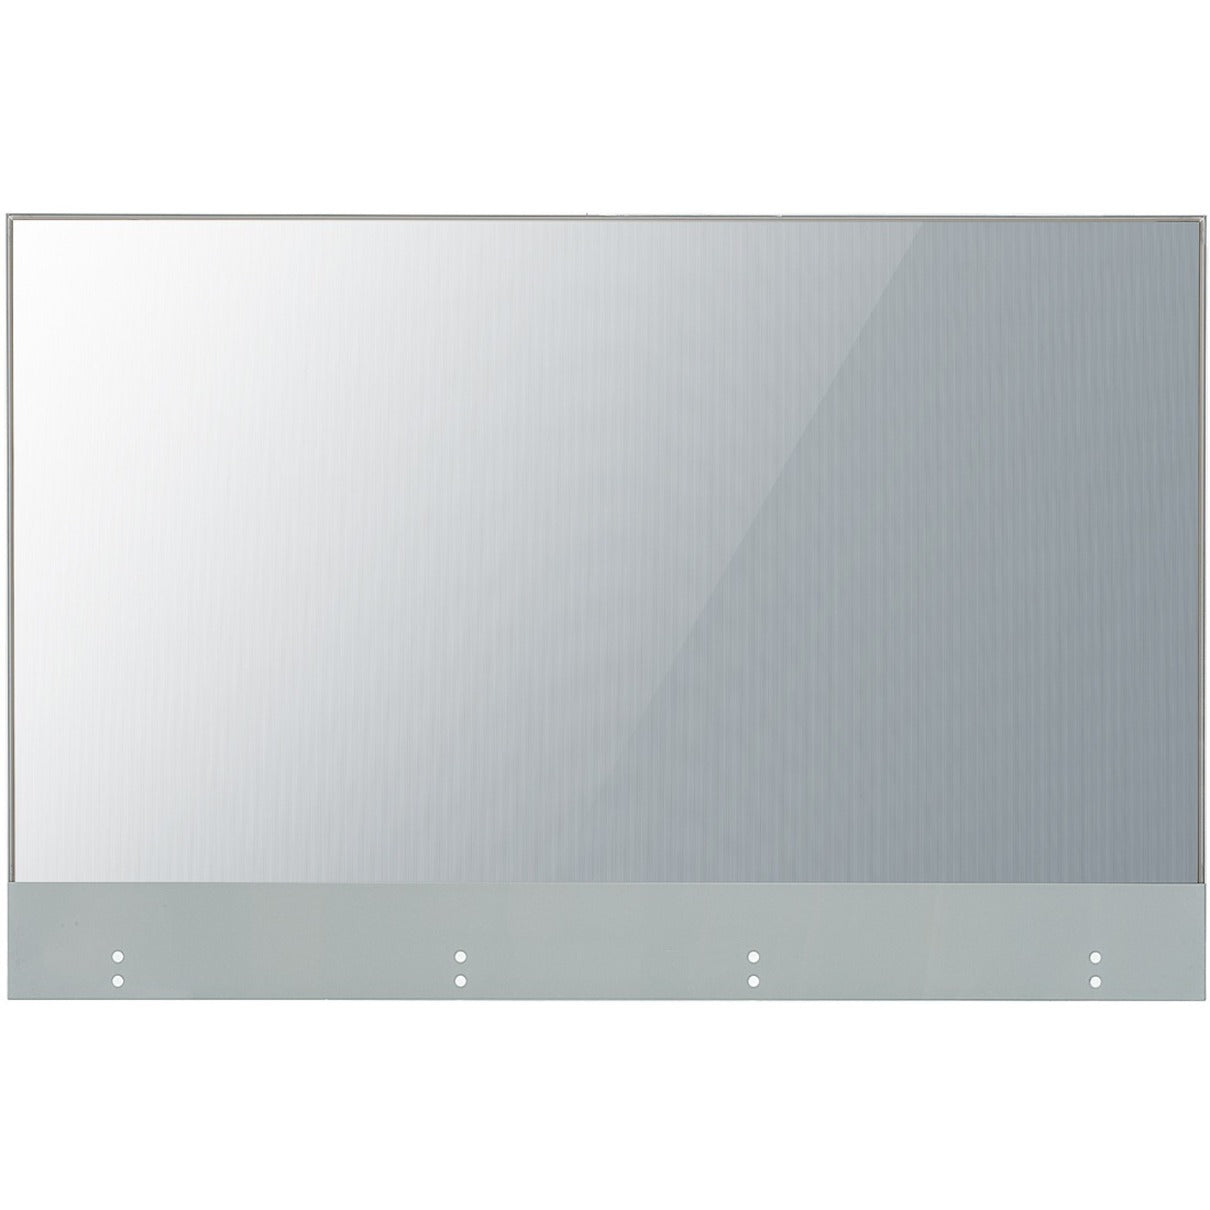 LG Transparent OLED Signage (55EW5G-V)